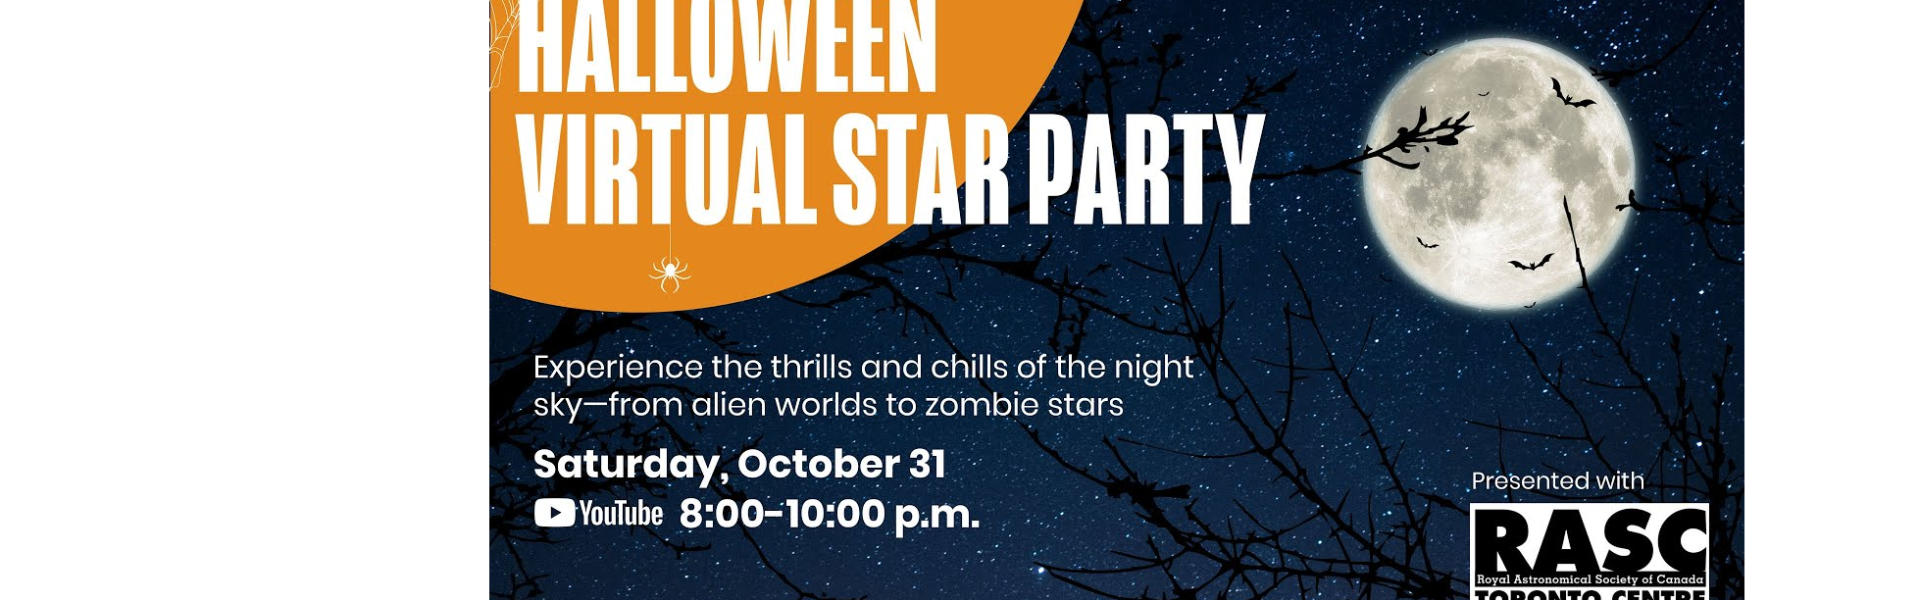 Halloween Virtual Star Party